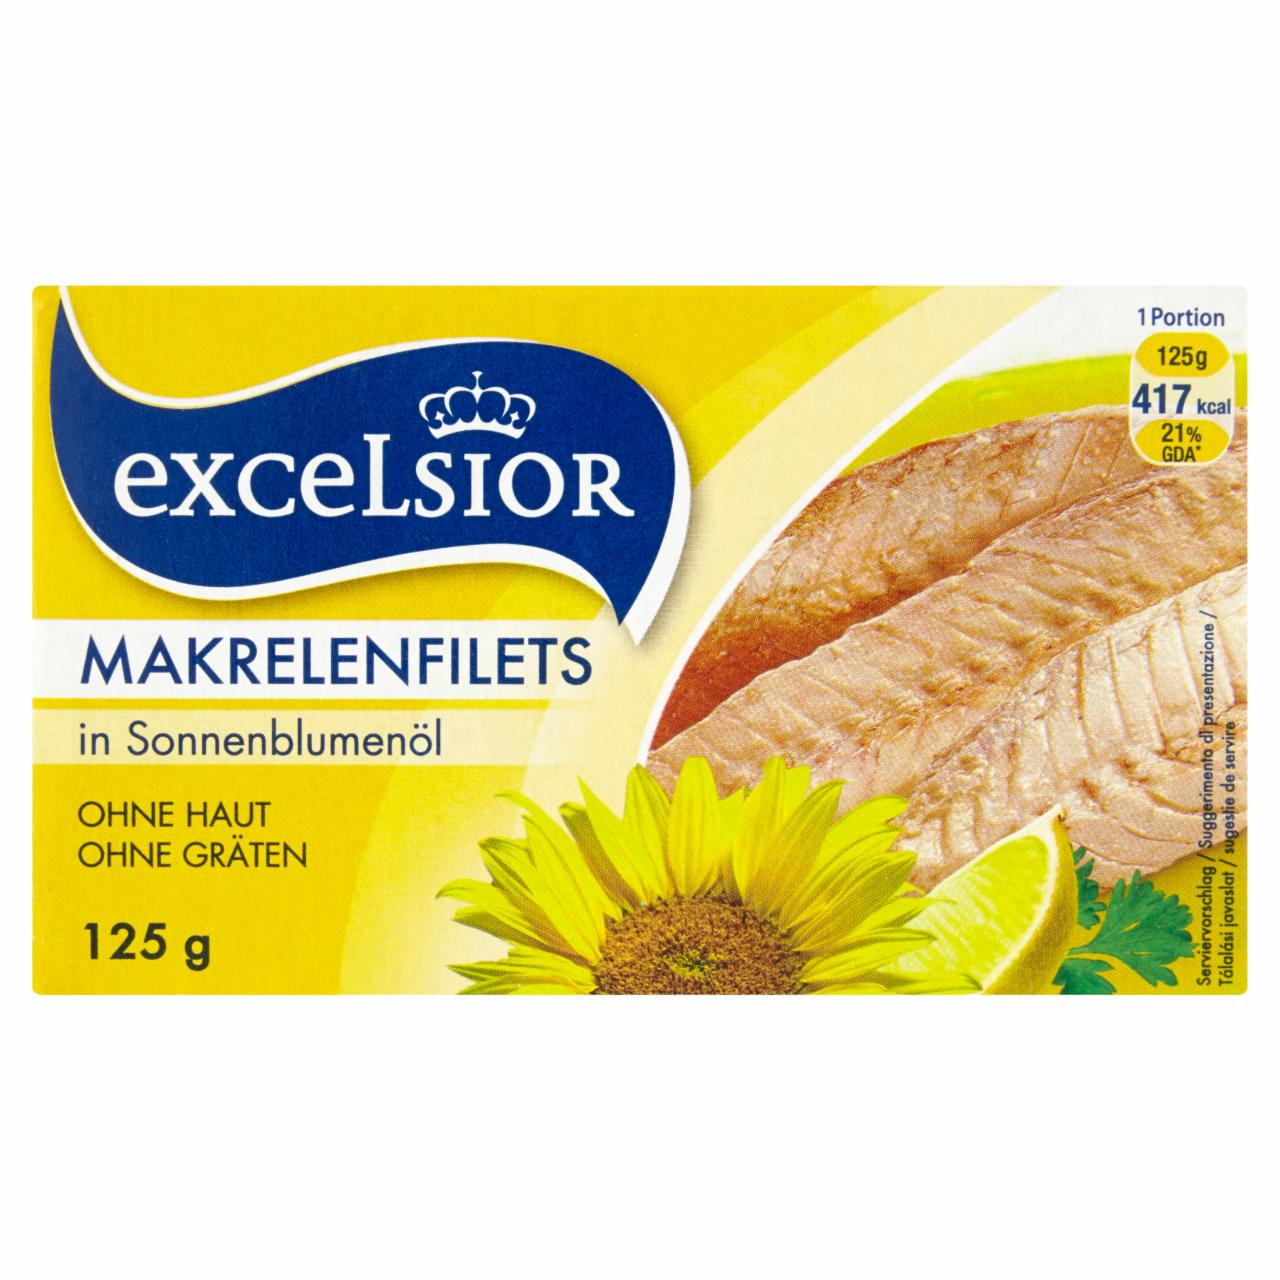 Képek - Excelsior makrélafilé napraforgó olajban 125 g